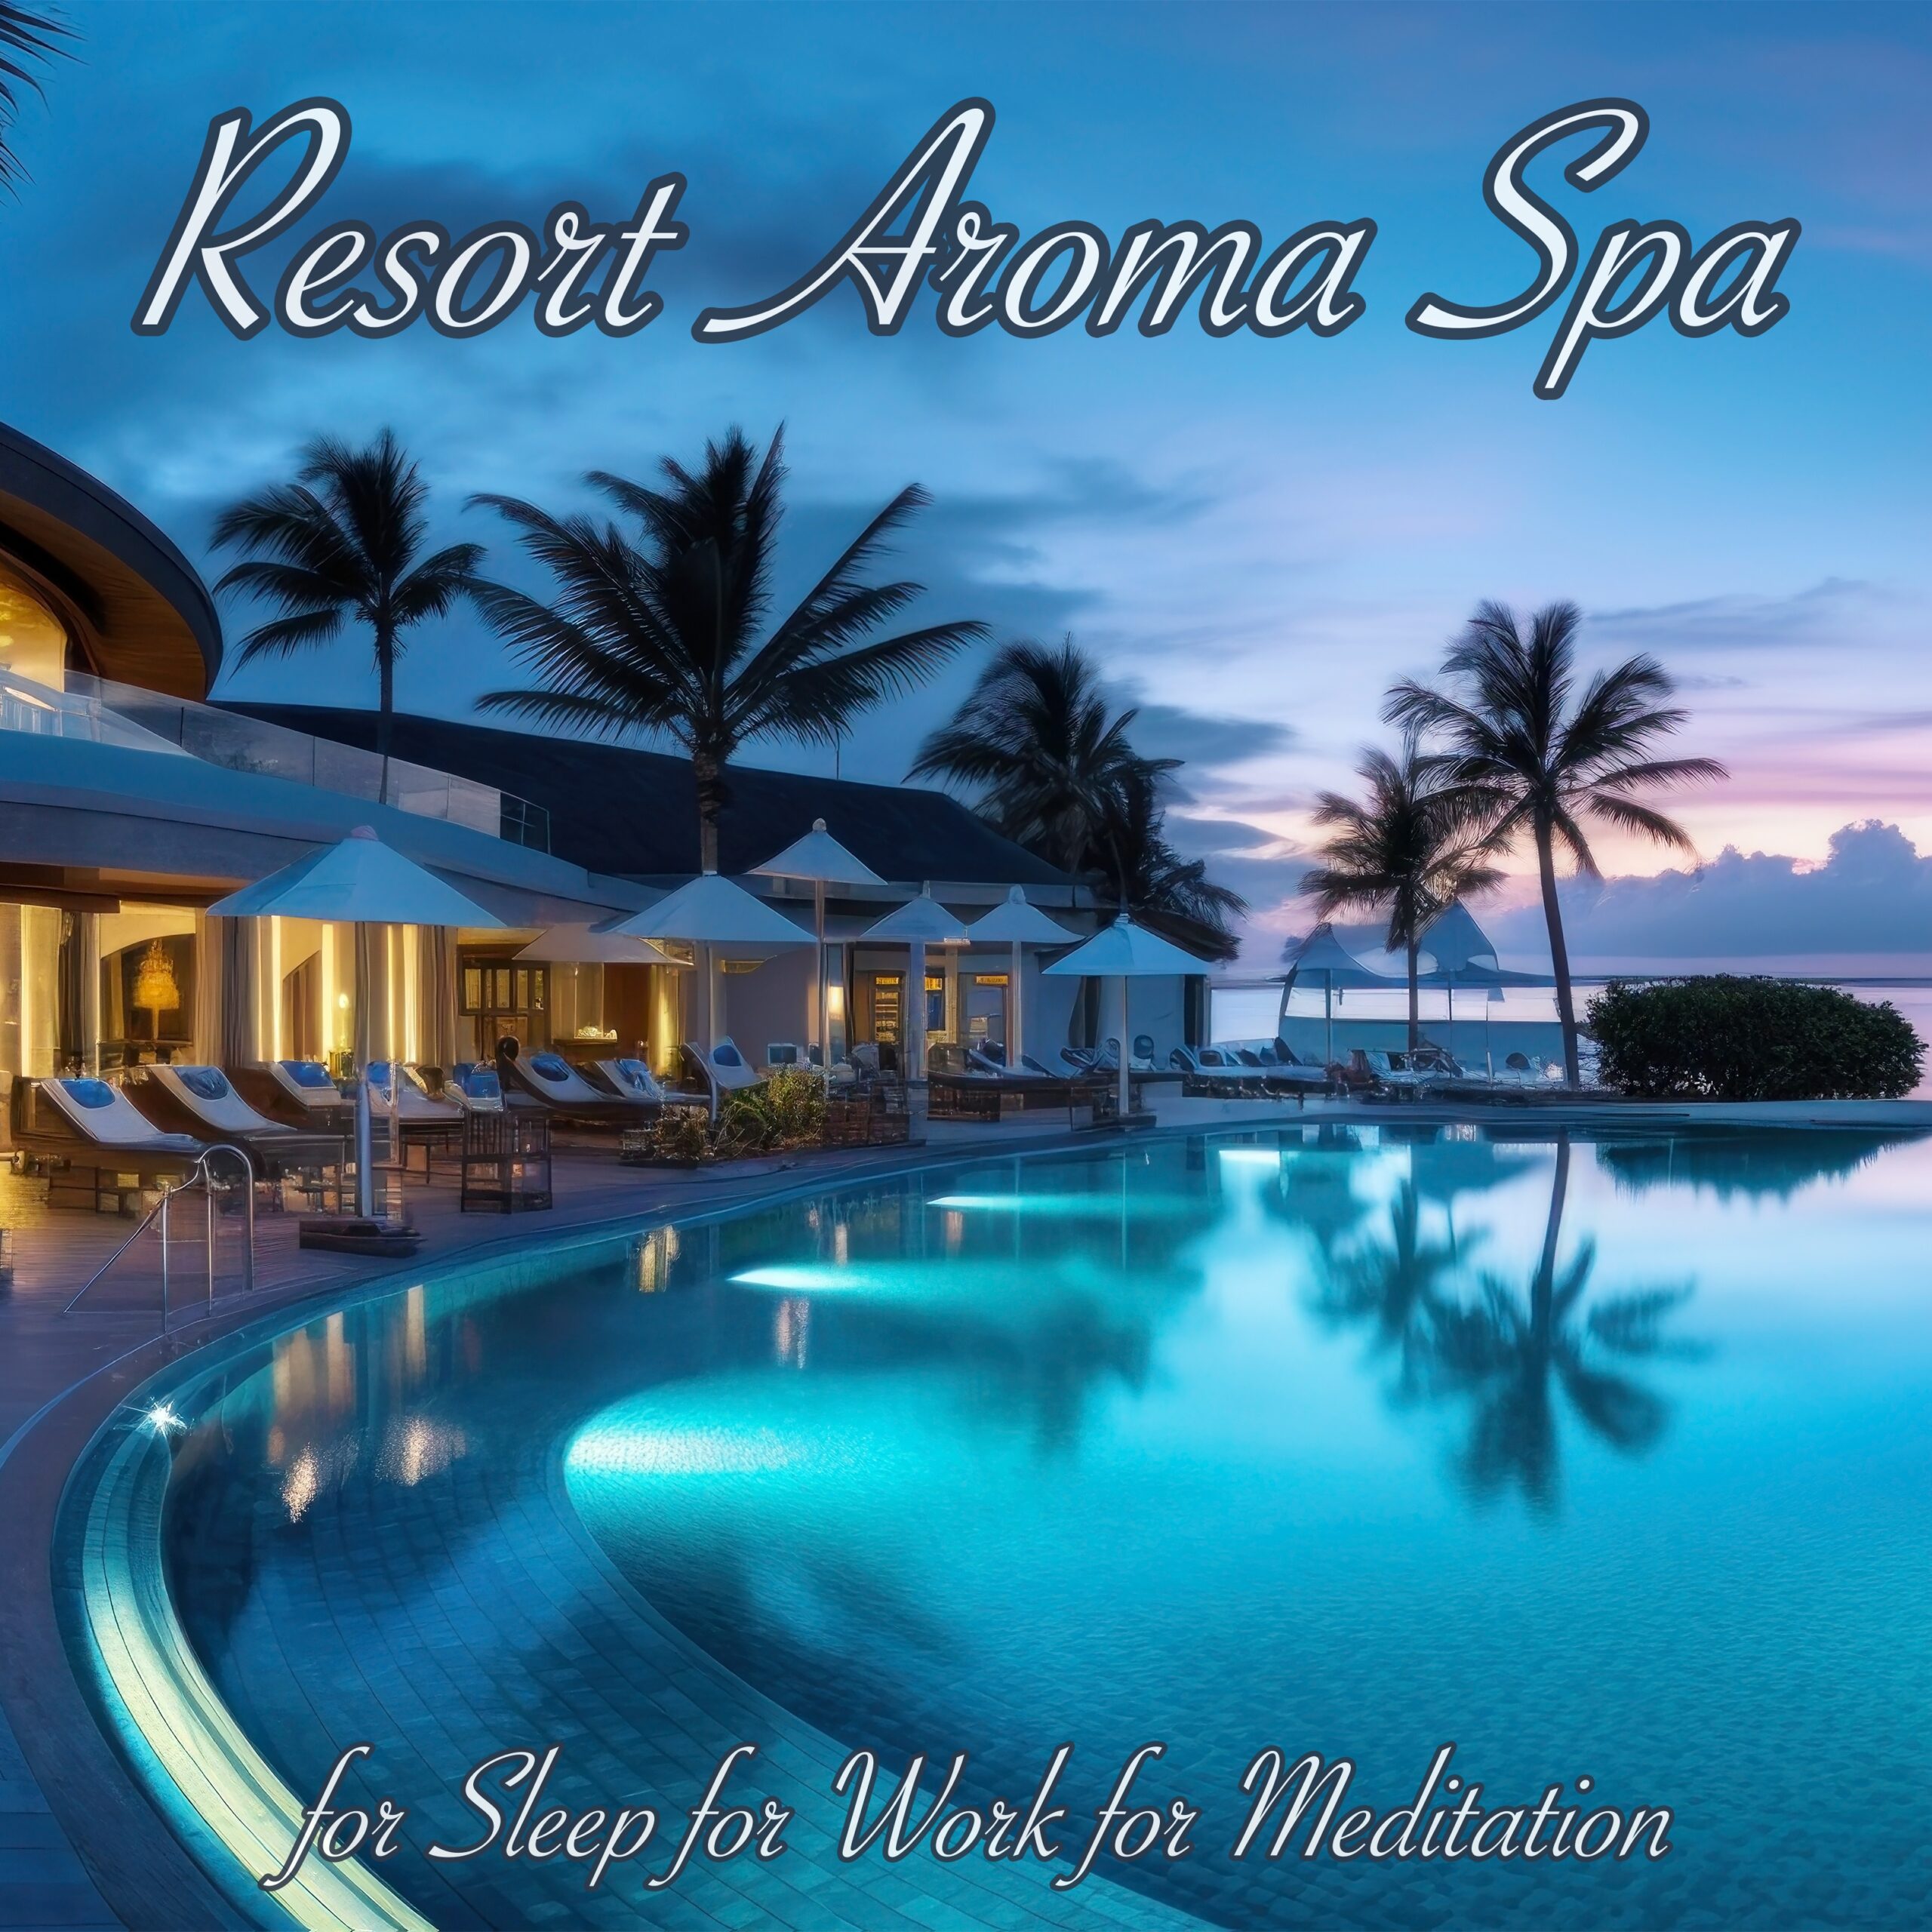 Resort Aroma Spa for Sleep for Work for Meditation 究極のリラックス スパミュージック